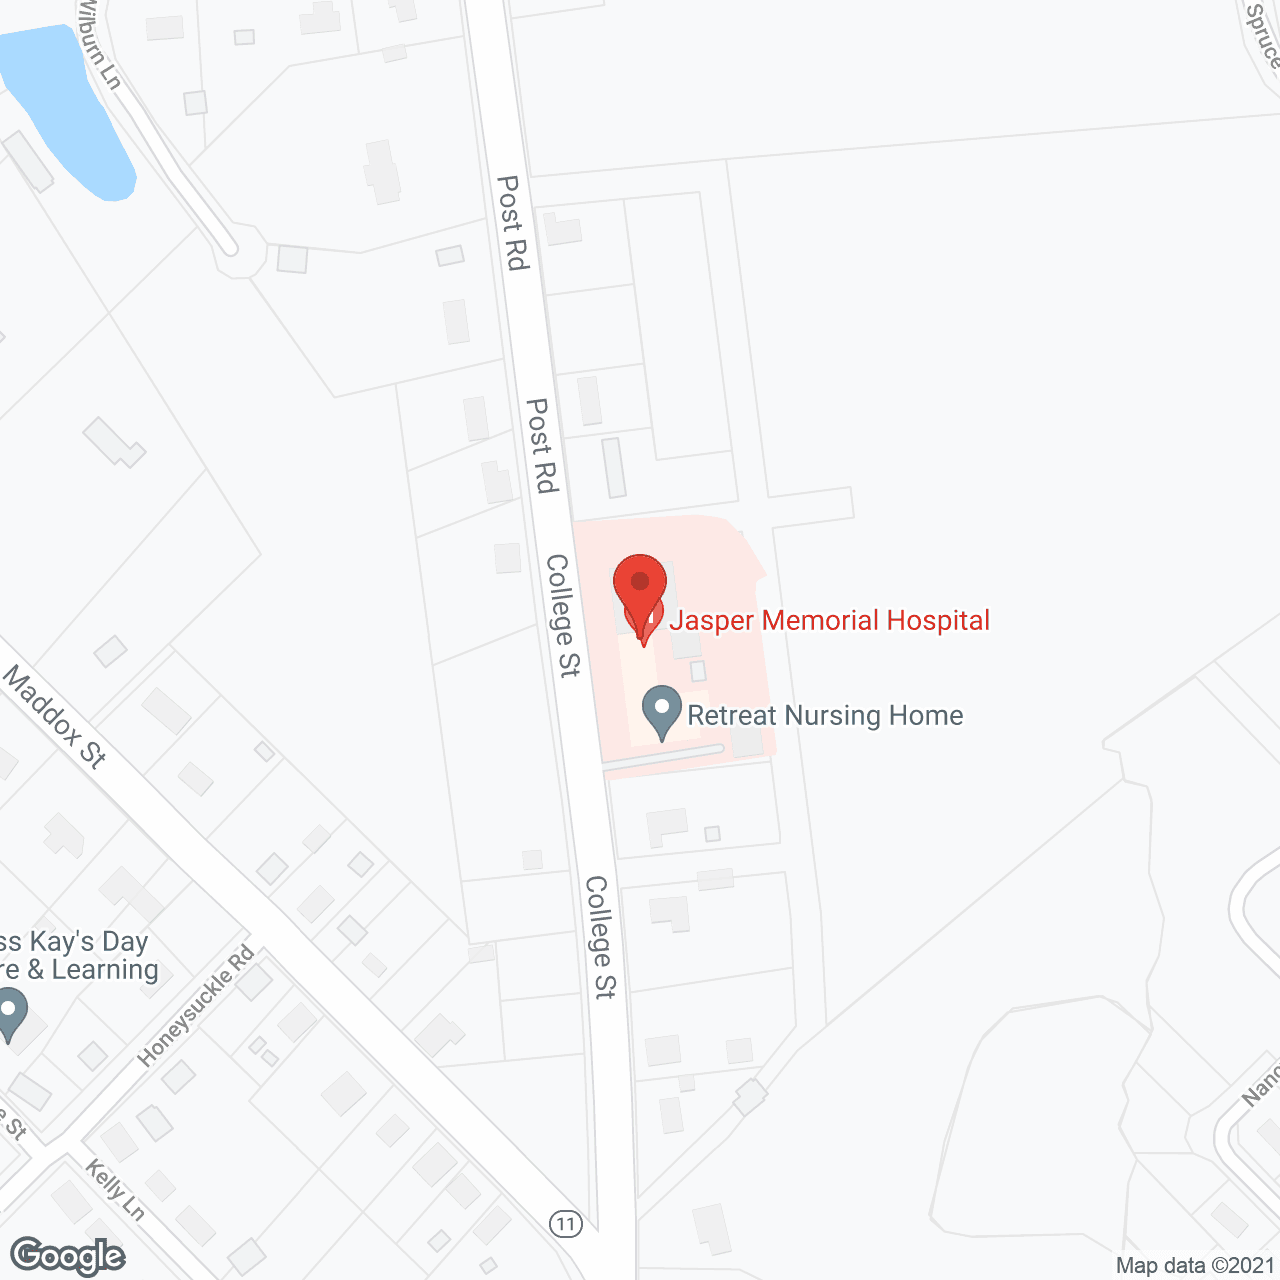 Retreat Nursing Home in google map